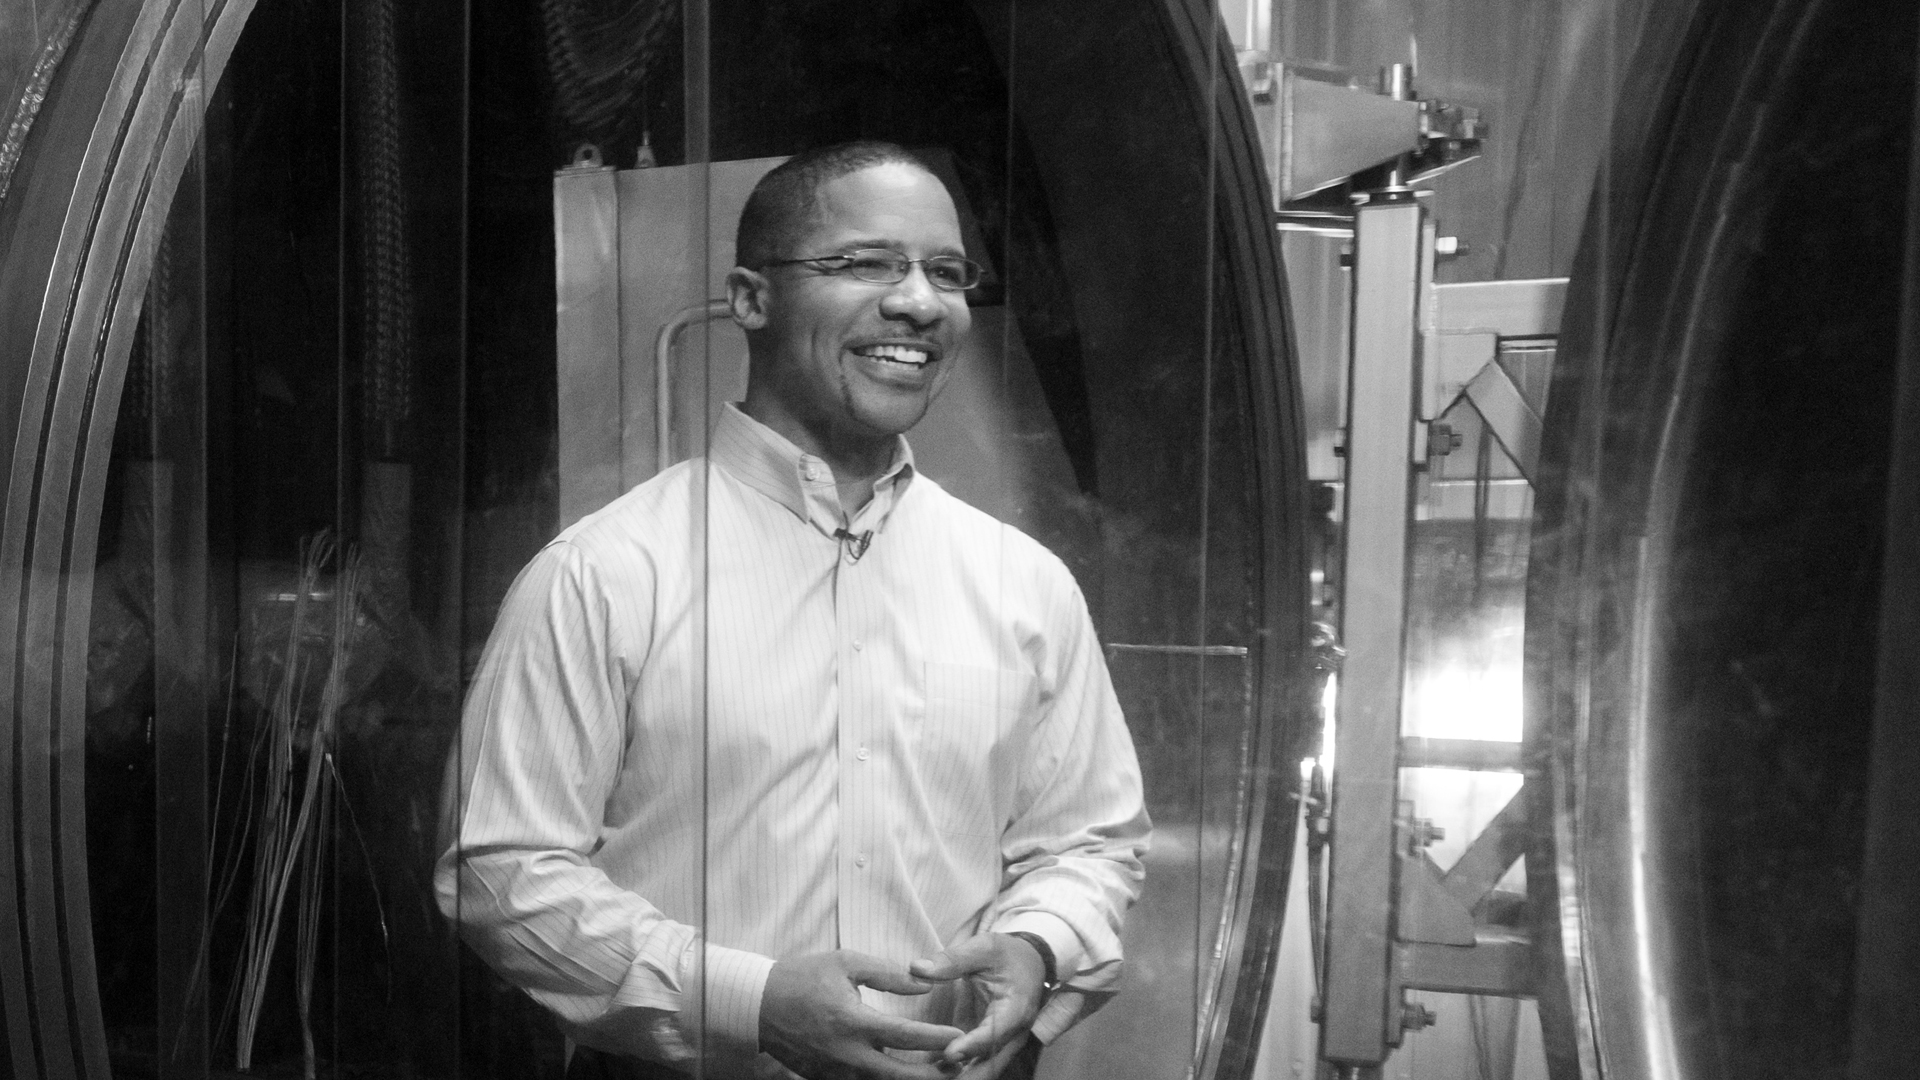 Mitchell L. R. Walker in the Georgia Tech High-Power Electric Propulsion Laboratory (HPEPL). (Photo: Rob Felt)